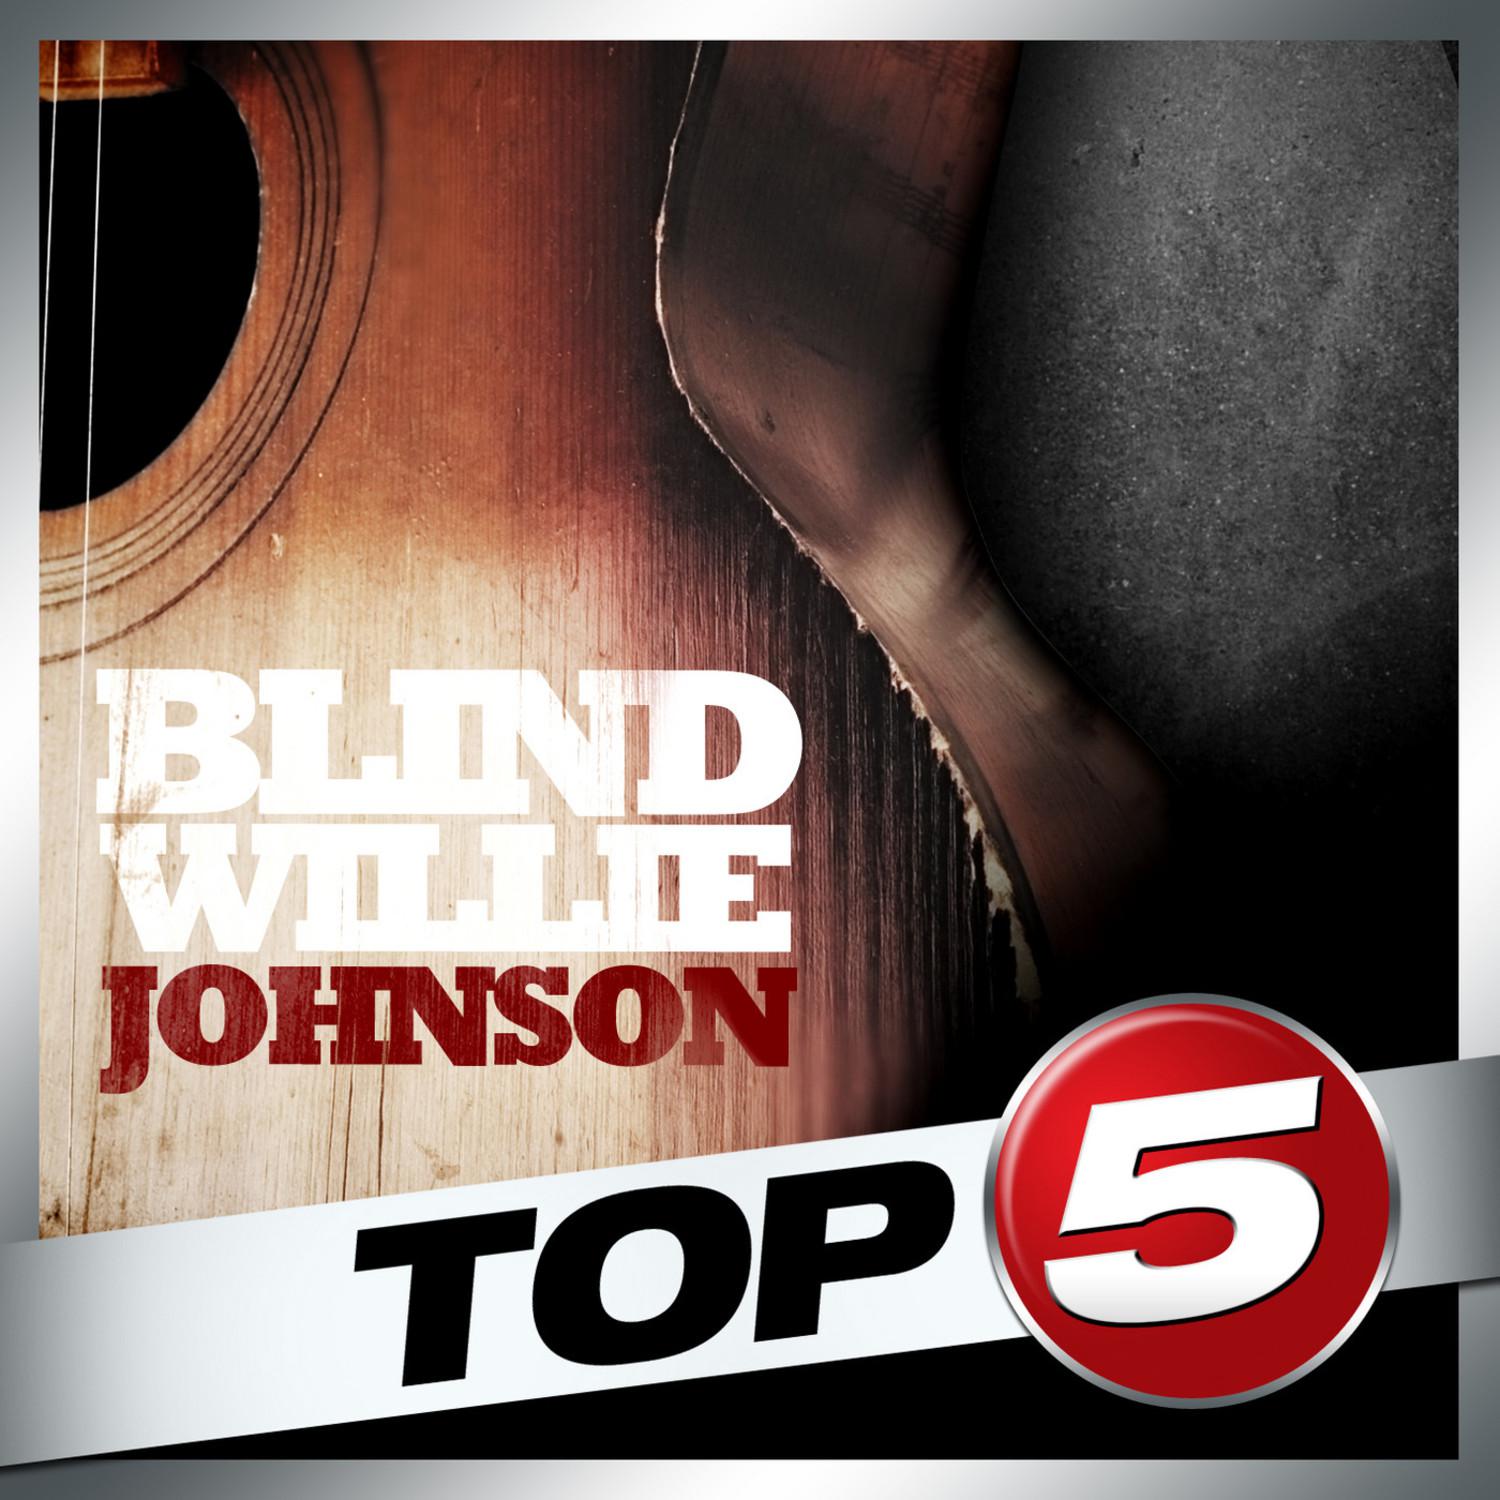 Top 5 - Blind Willie Johnson - EP